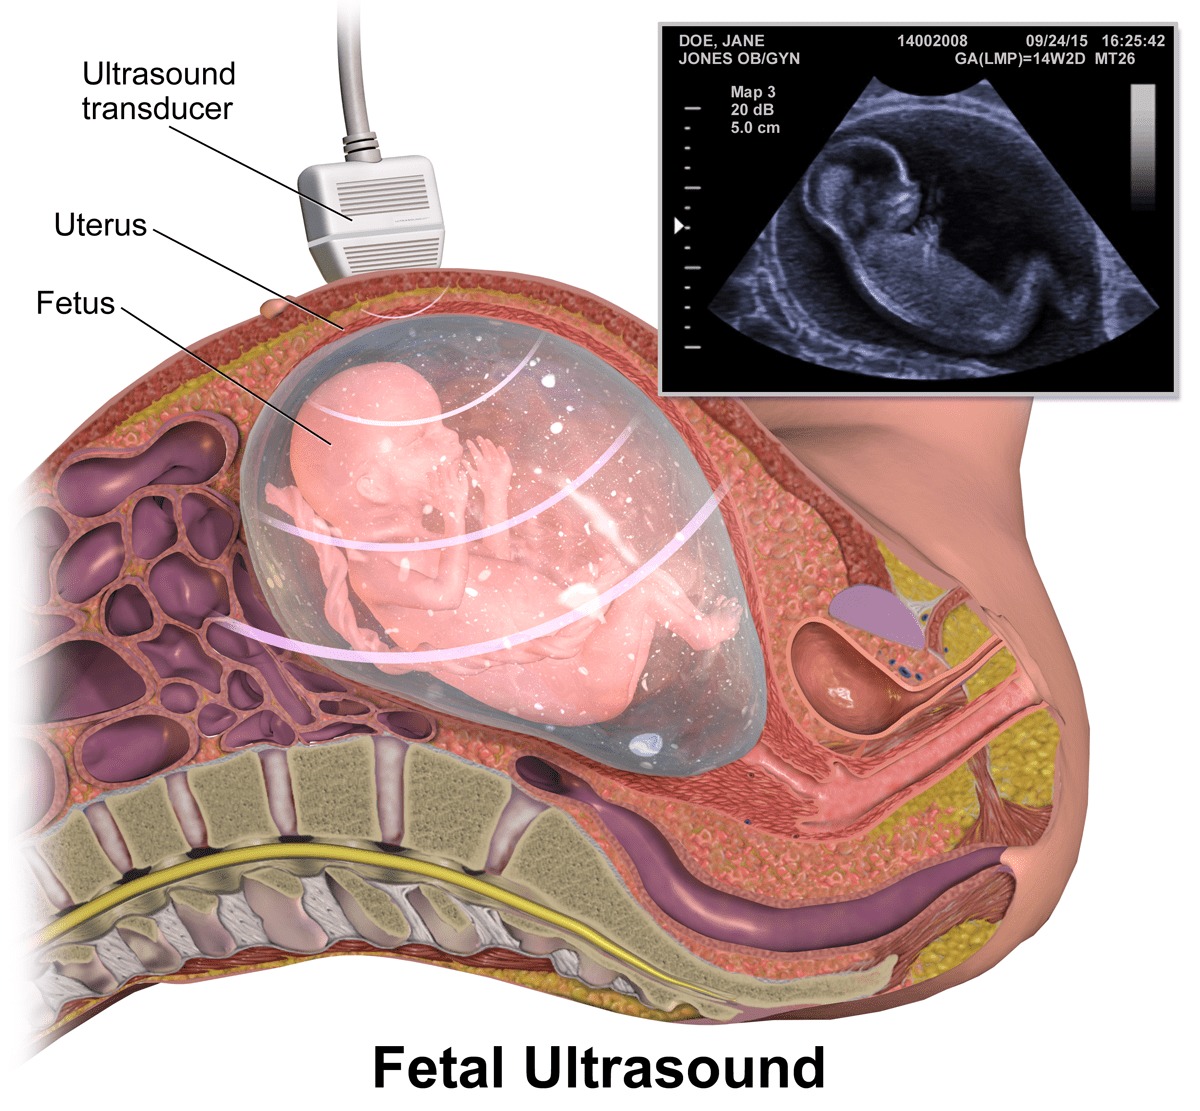 Fetal Ultrasound - Preventing Birth Injuries